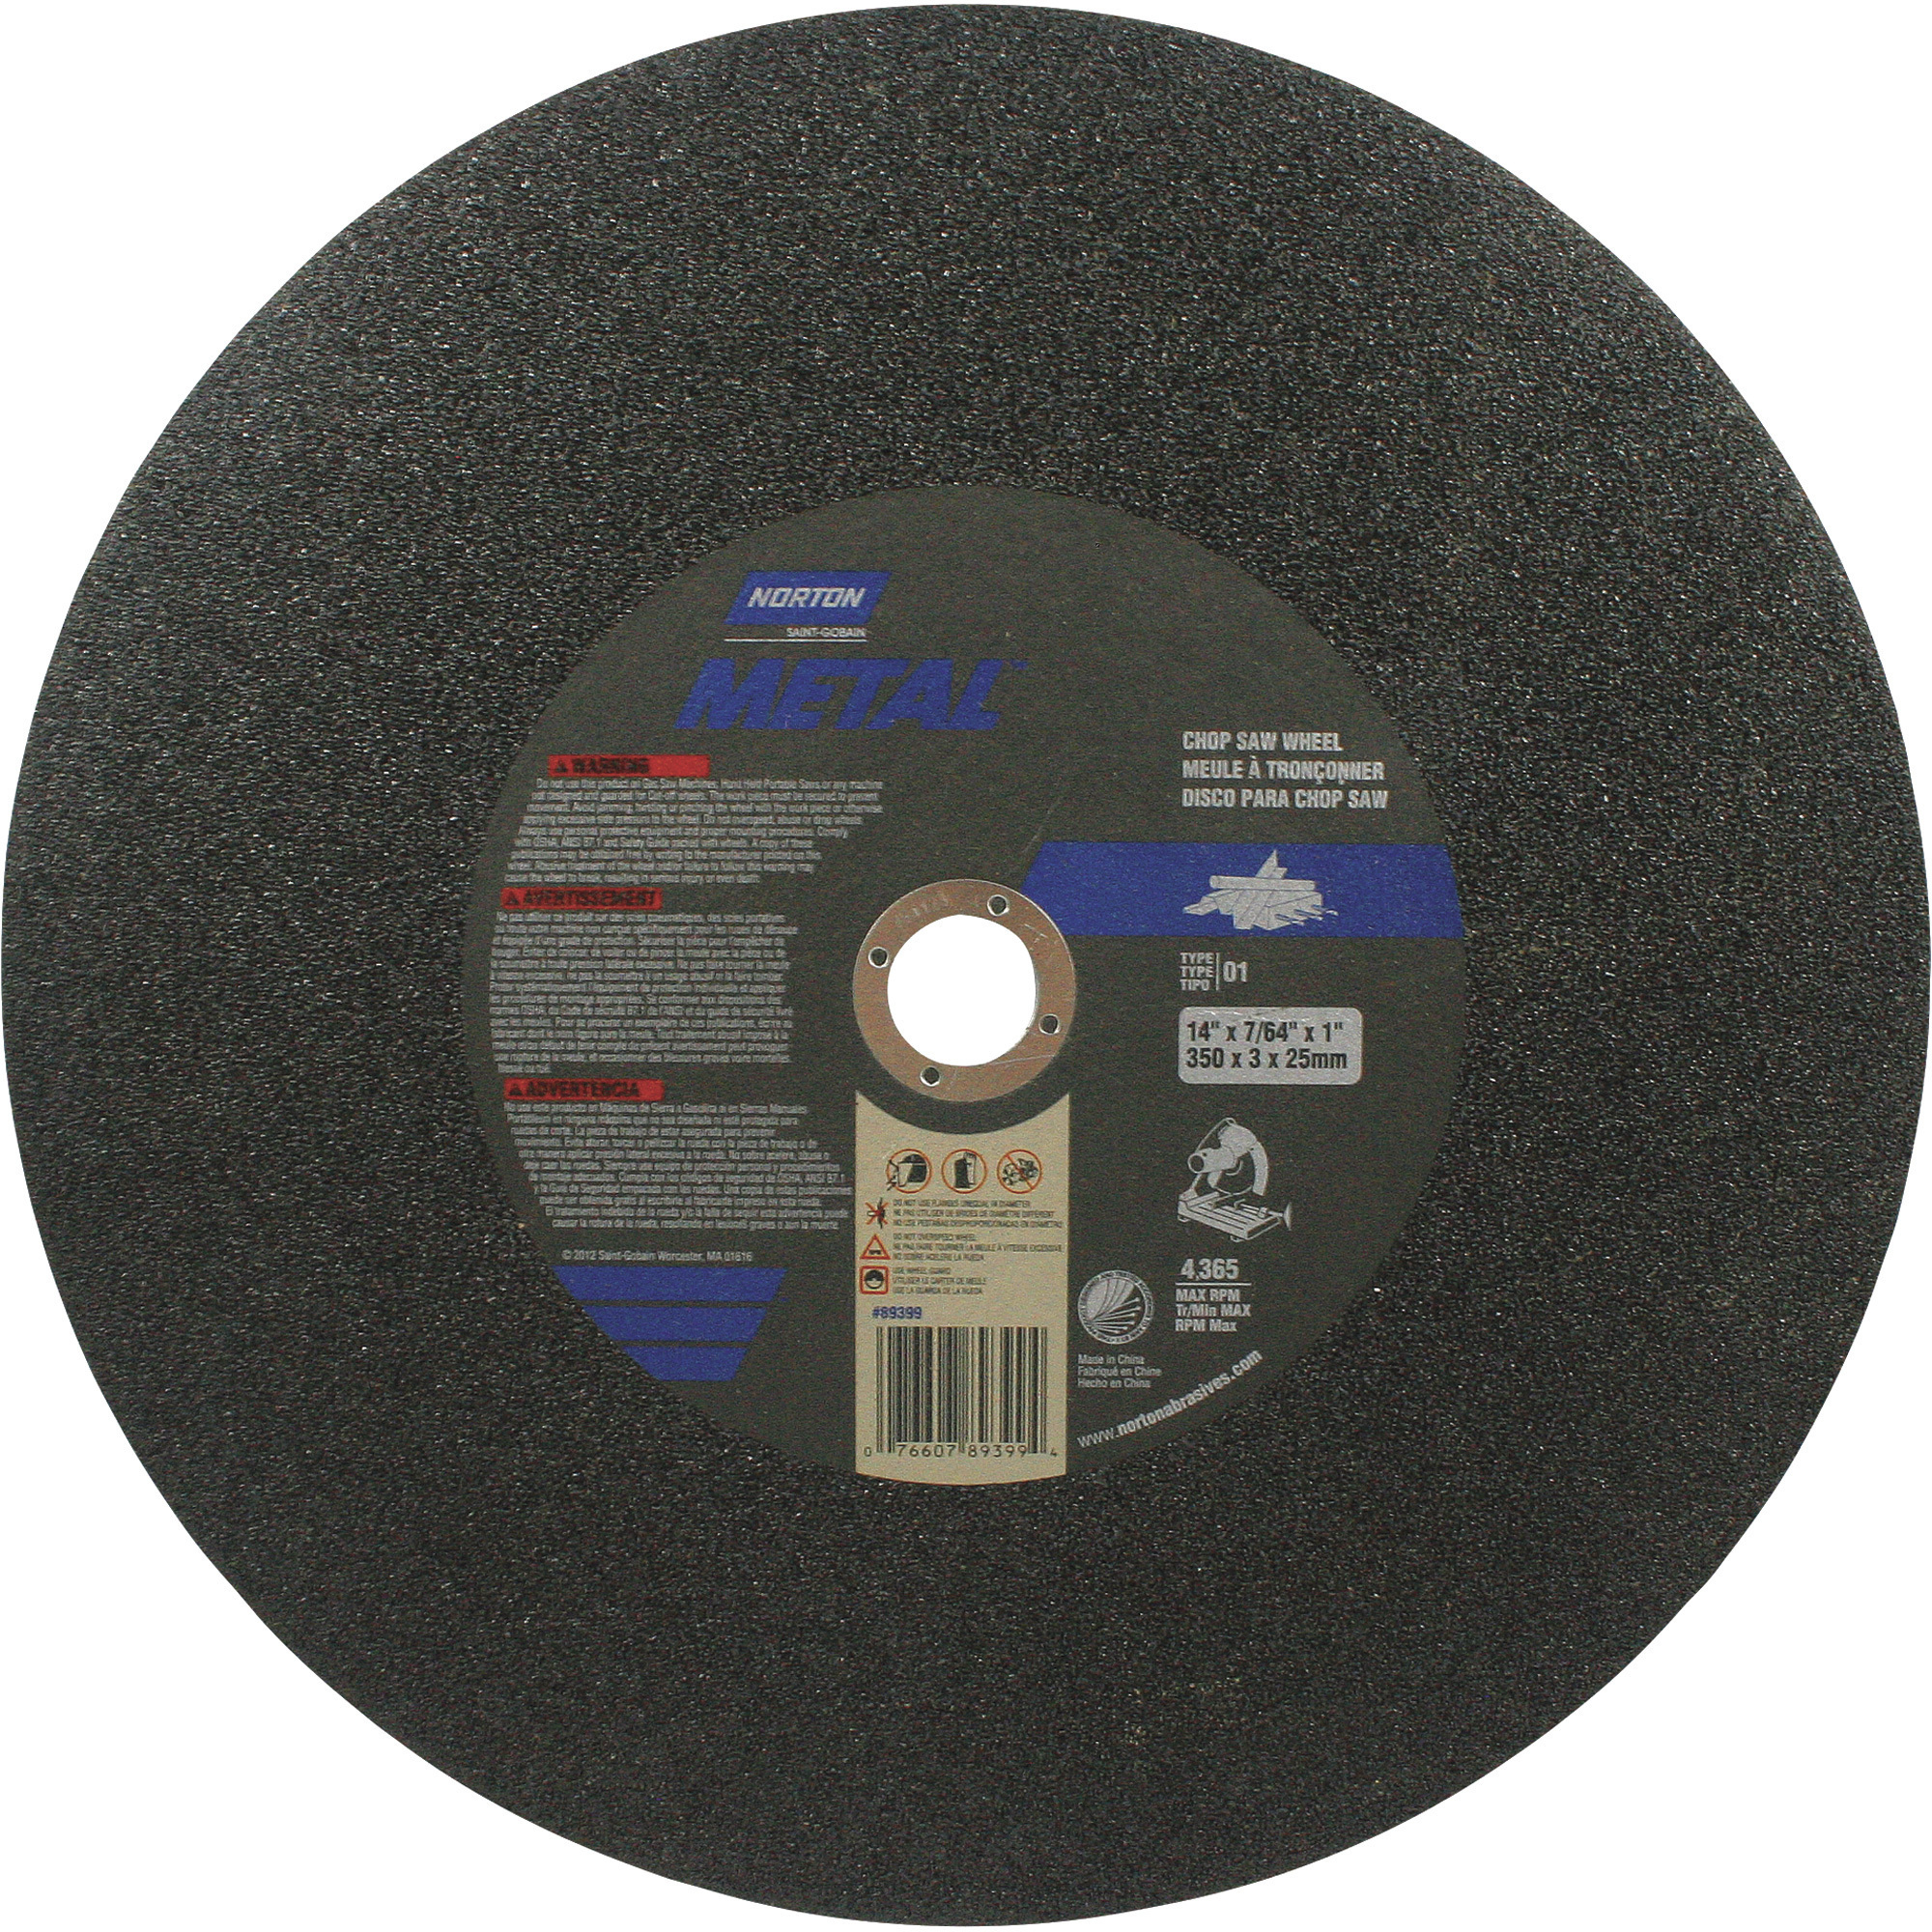 Norton Chop Saw Cutoff Blade, 14Inch Diameter, 4365 RPM, Model 076607-89399-4